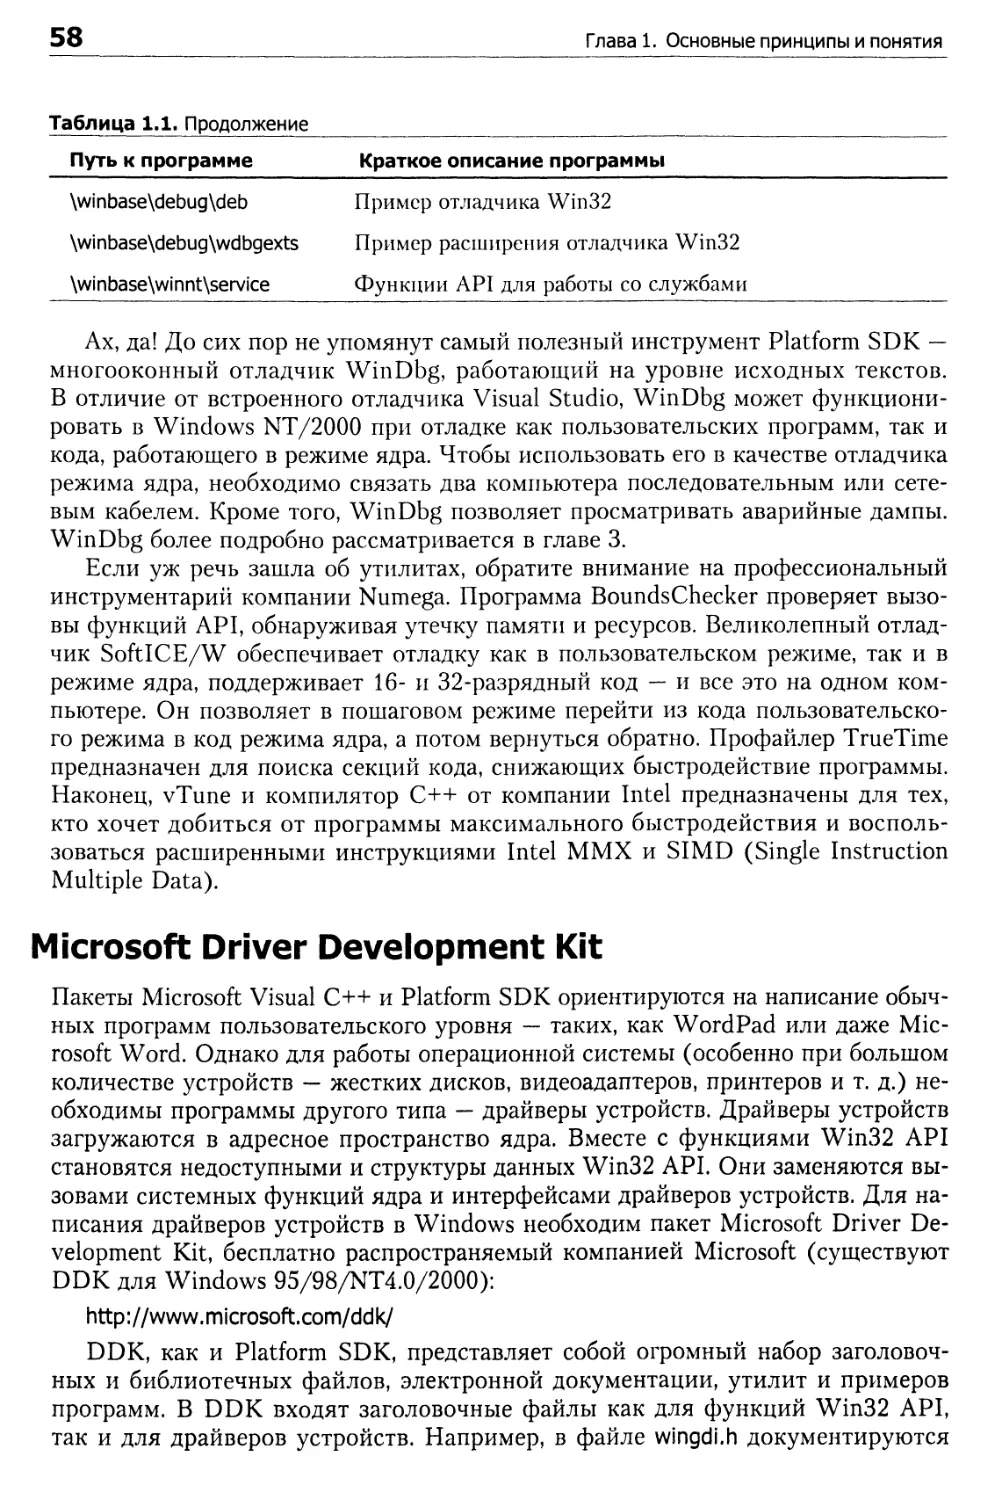 Microsoft Driver Development Kit